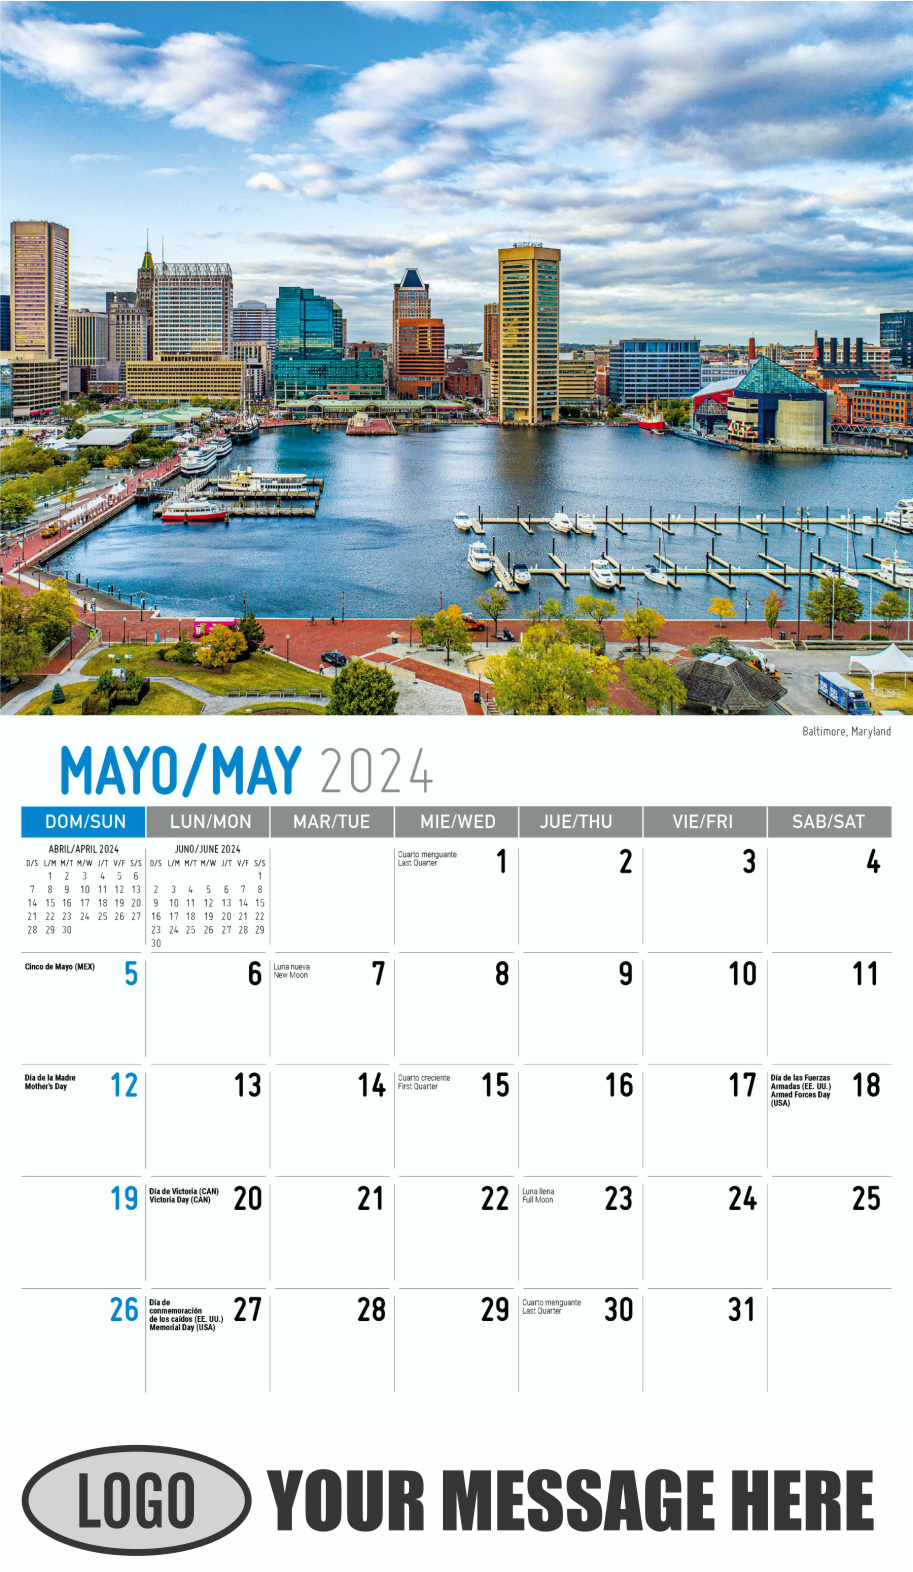 Scenes of America 2024 Bilingual Business Promo Calendar - May